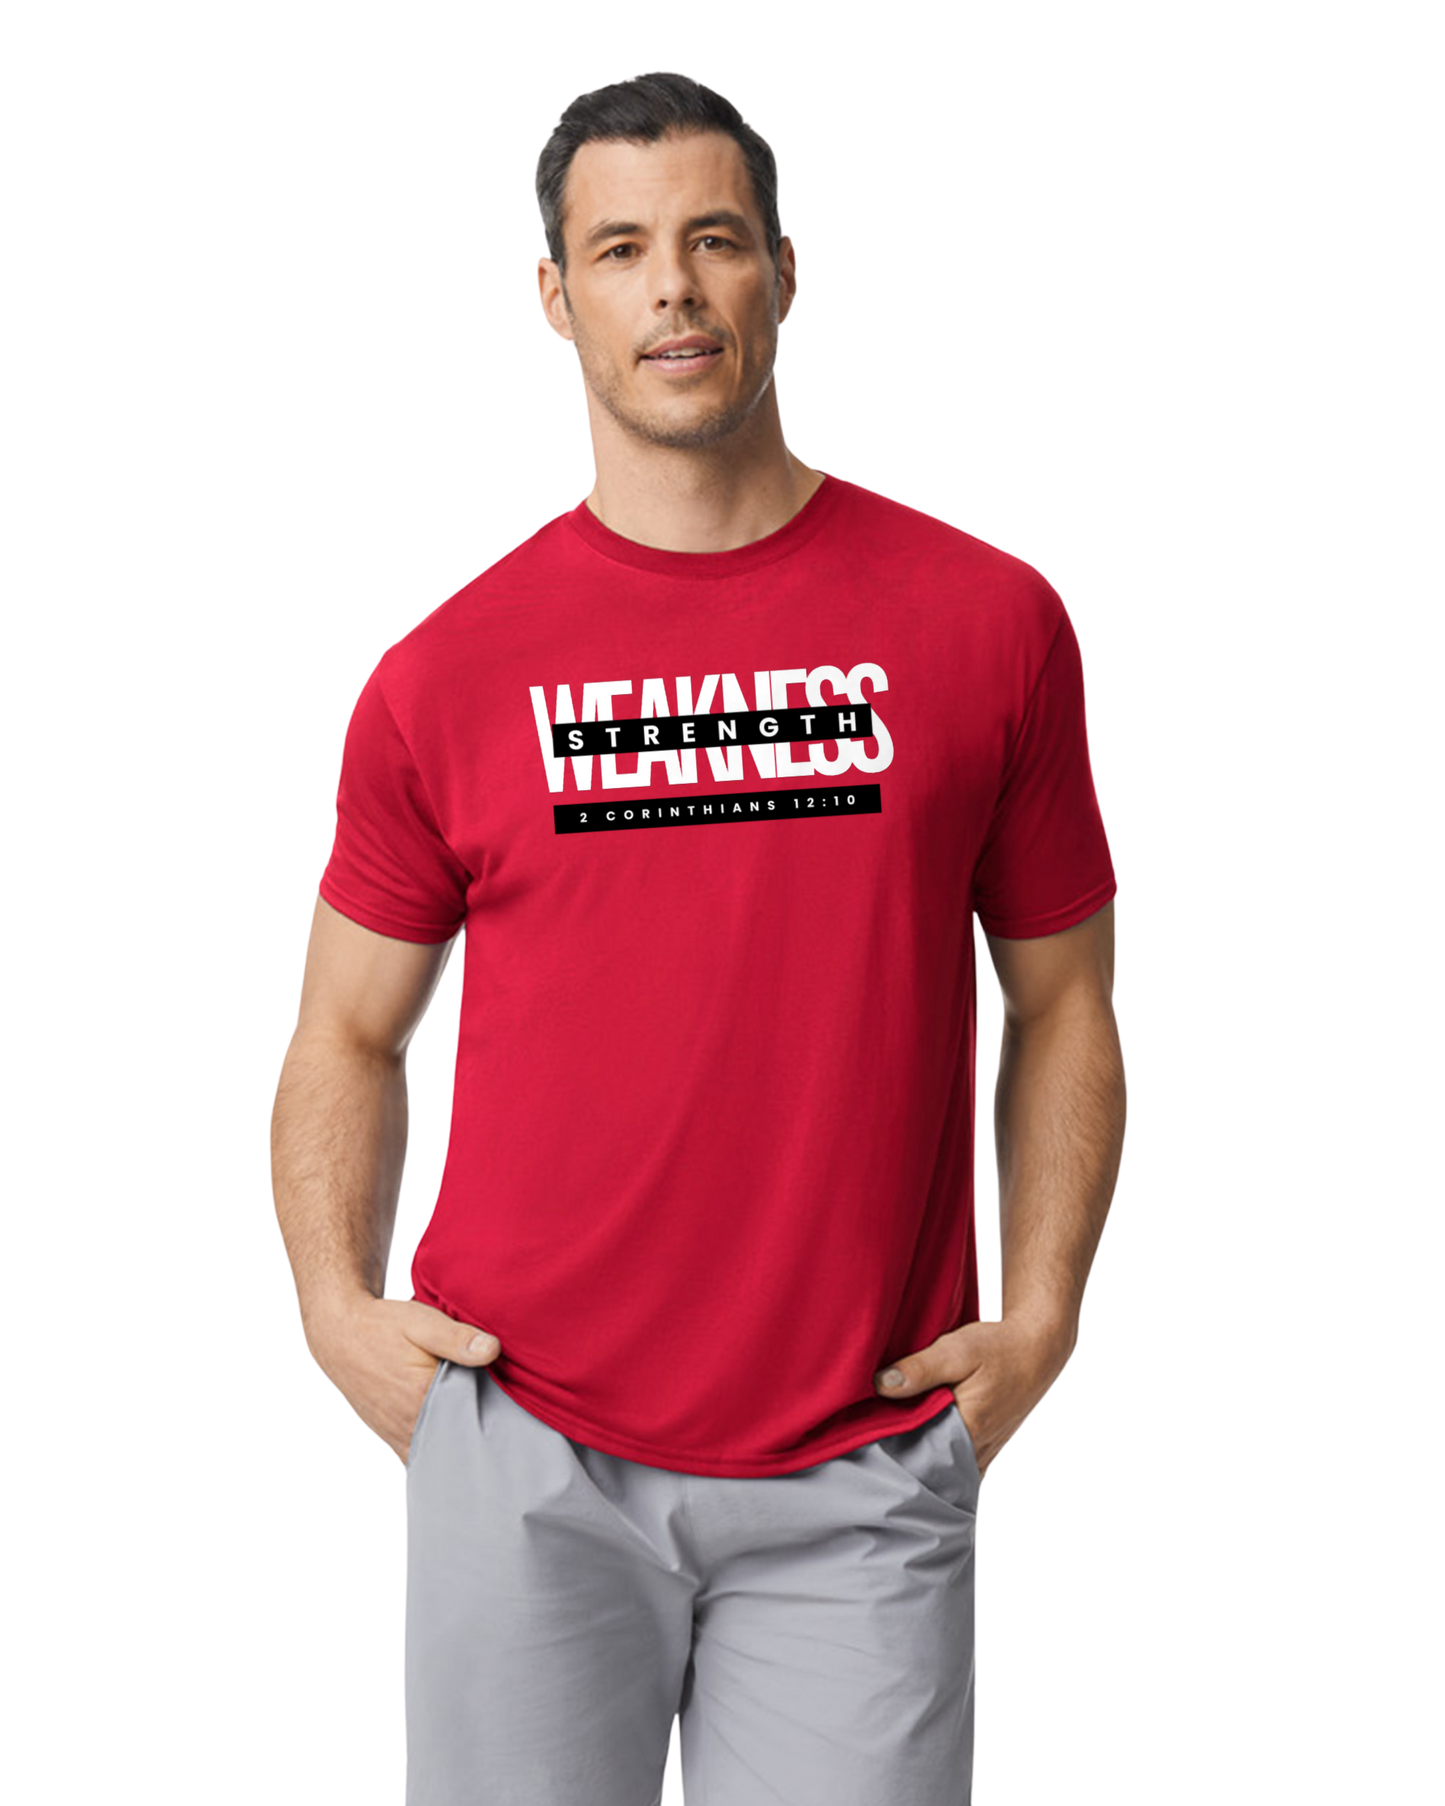 Strength in Weakness Men's Performance Shirt